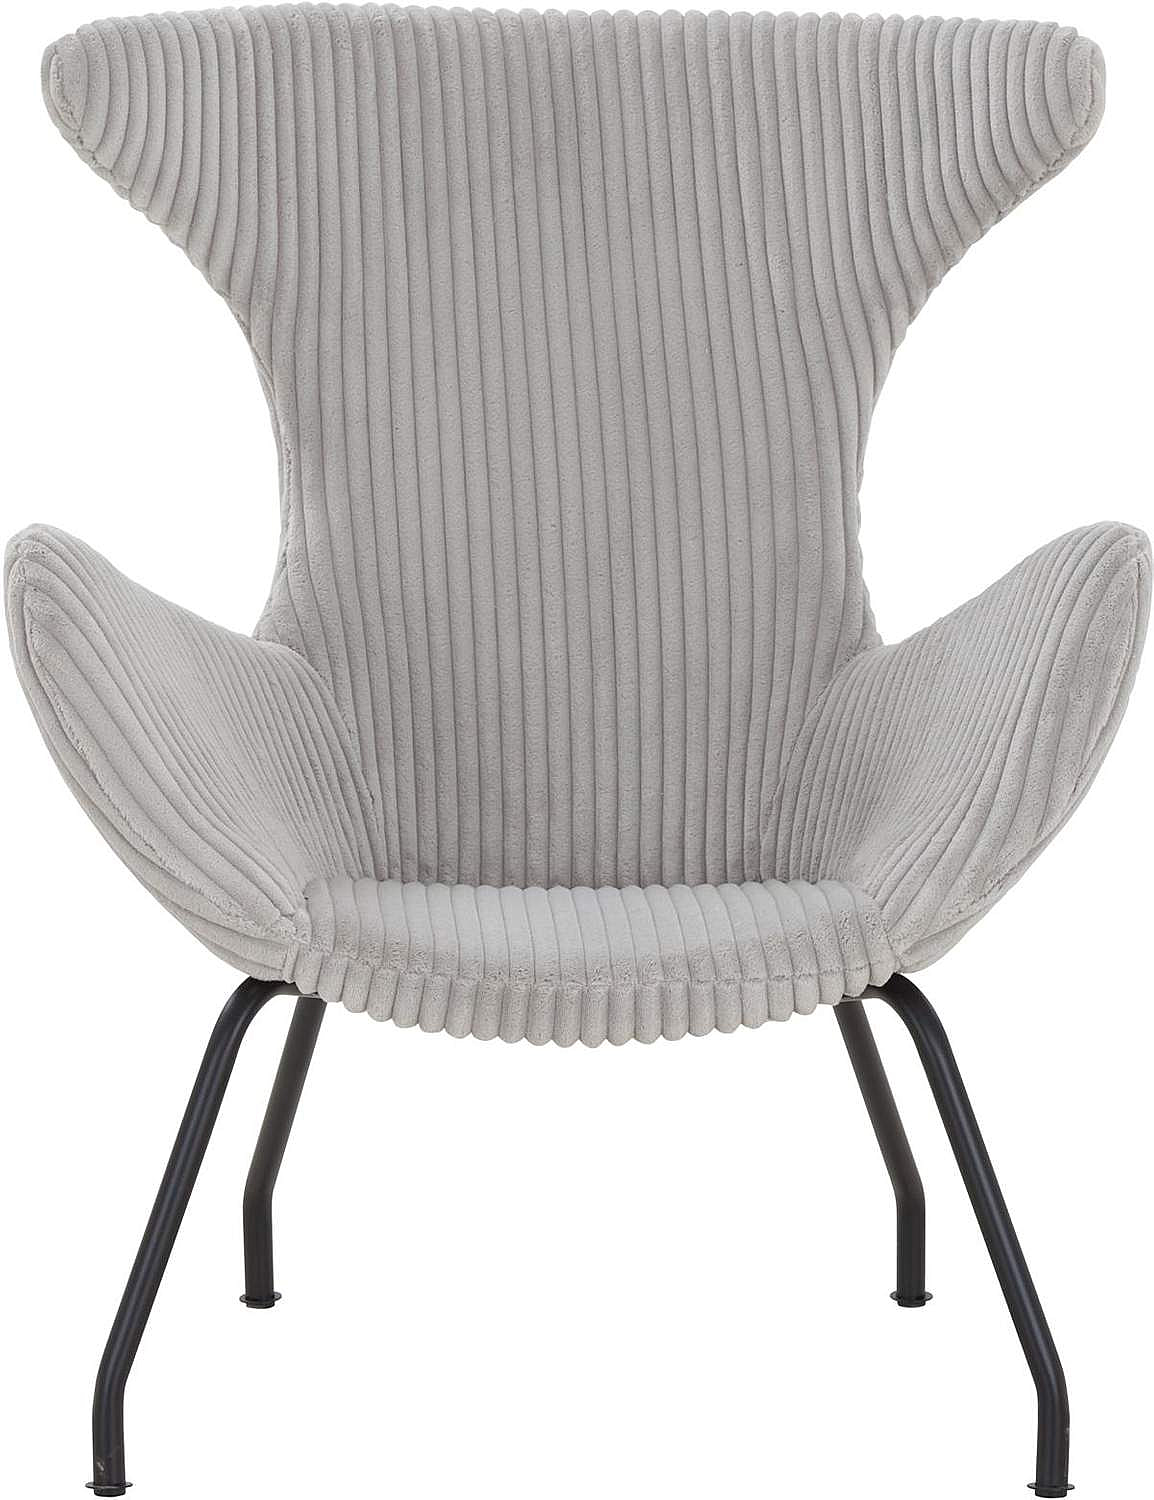 SalesFever Relaxsessel Sessel mit Texturstoff in Grau | Sessel